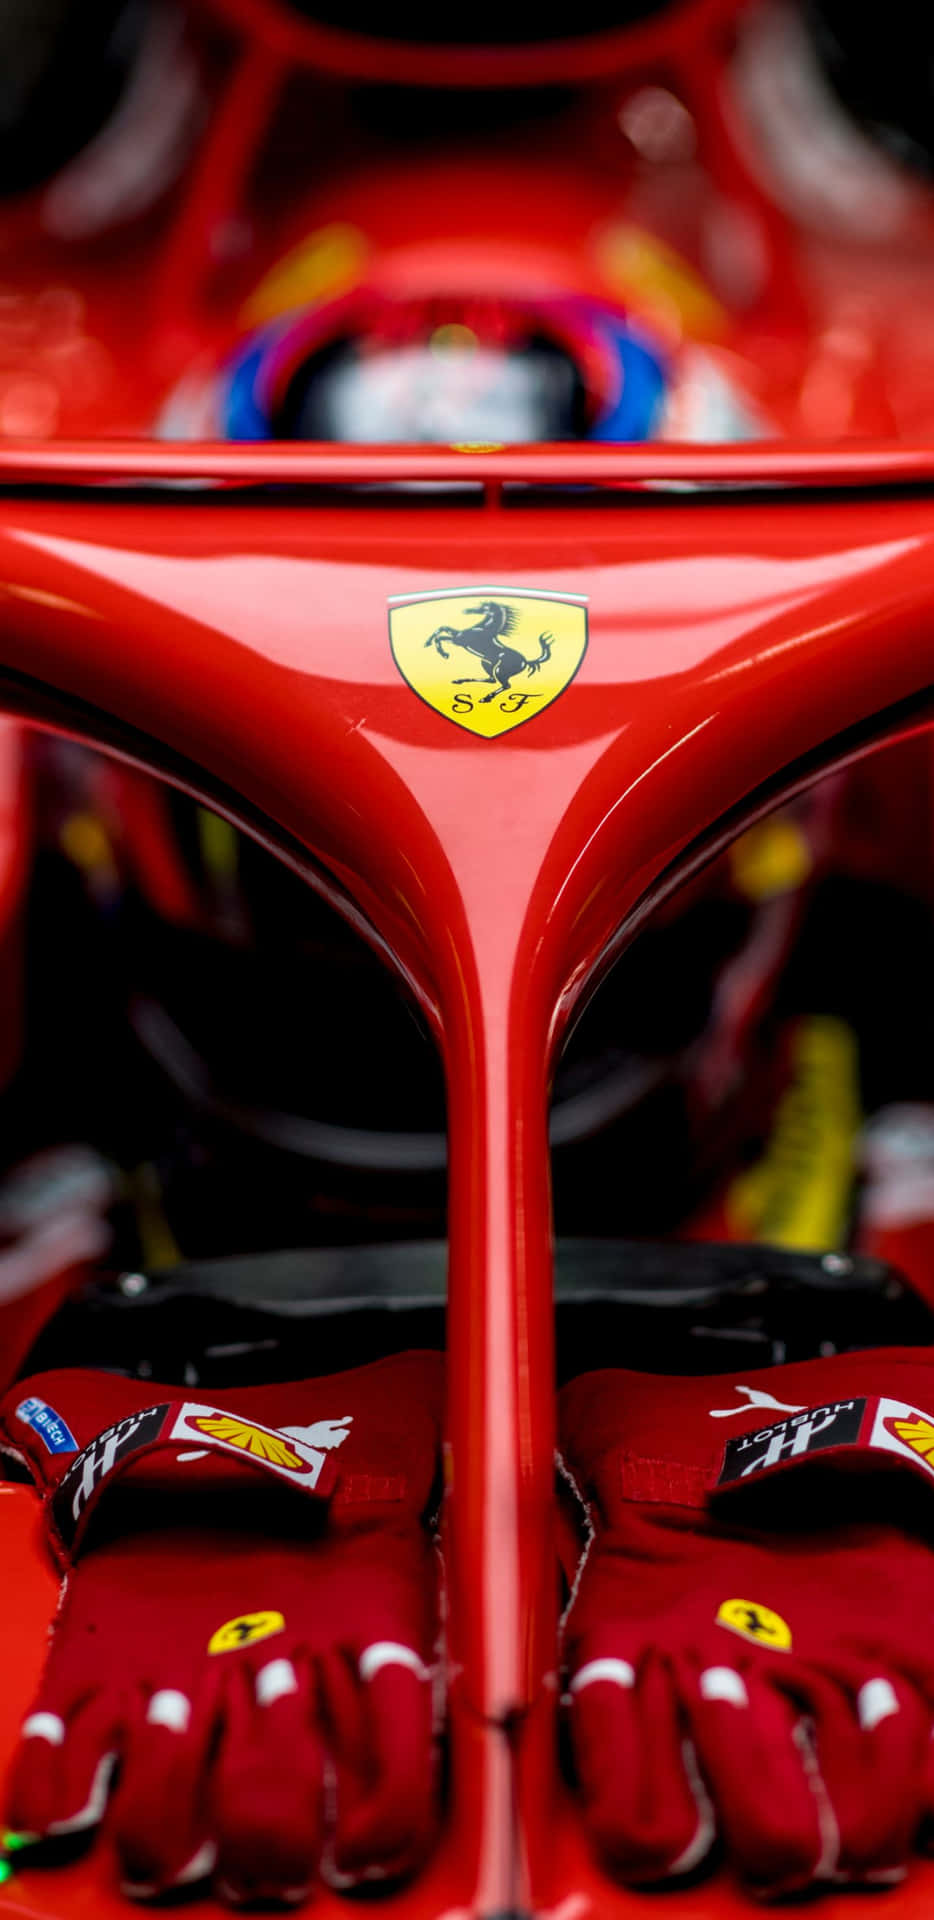 Ferrarinärbilds Fotografi Pixel 3xl F1 2018 Bakgrund.